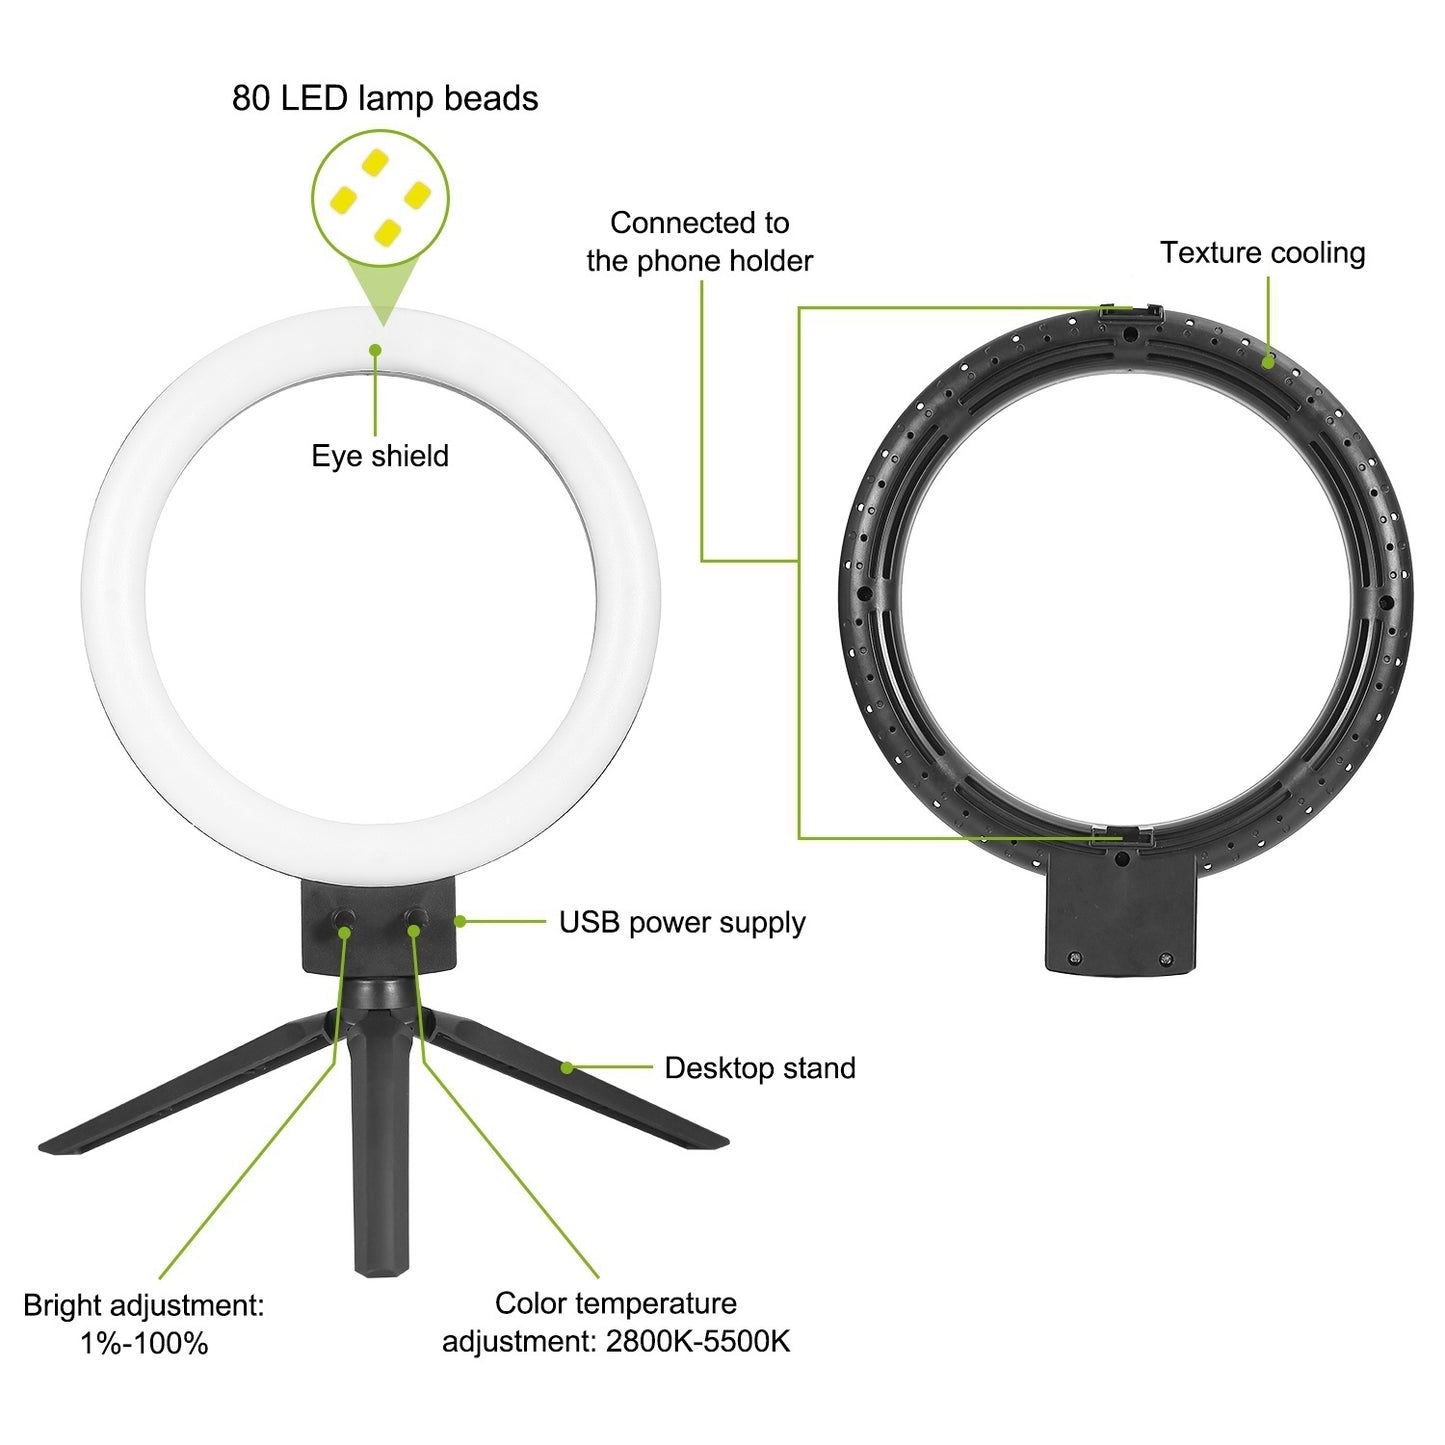 9" Dimmable LED Ring Light w/ Tripod Phone Selfie Camera Studio Photo Video Makeup Lamp